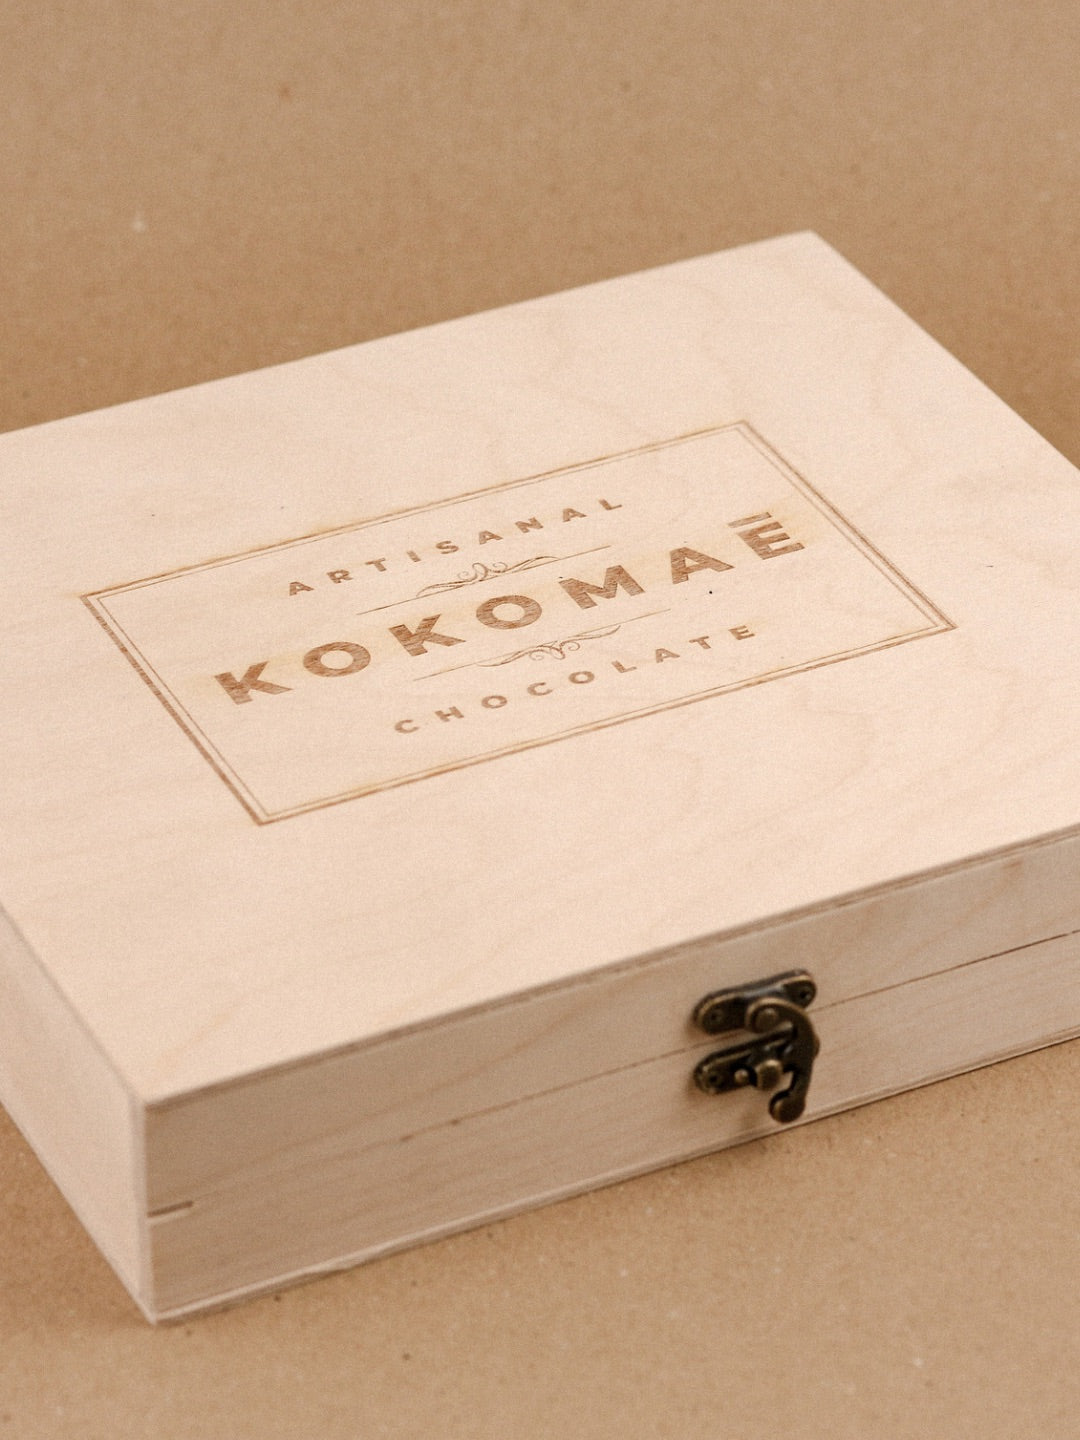 Kokomaē Decadent Chocolate Assortments: 9 Unique Flavors with Chocolate Rocks & Nuts